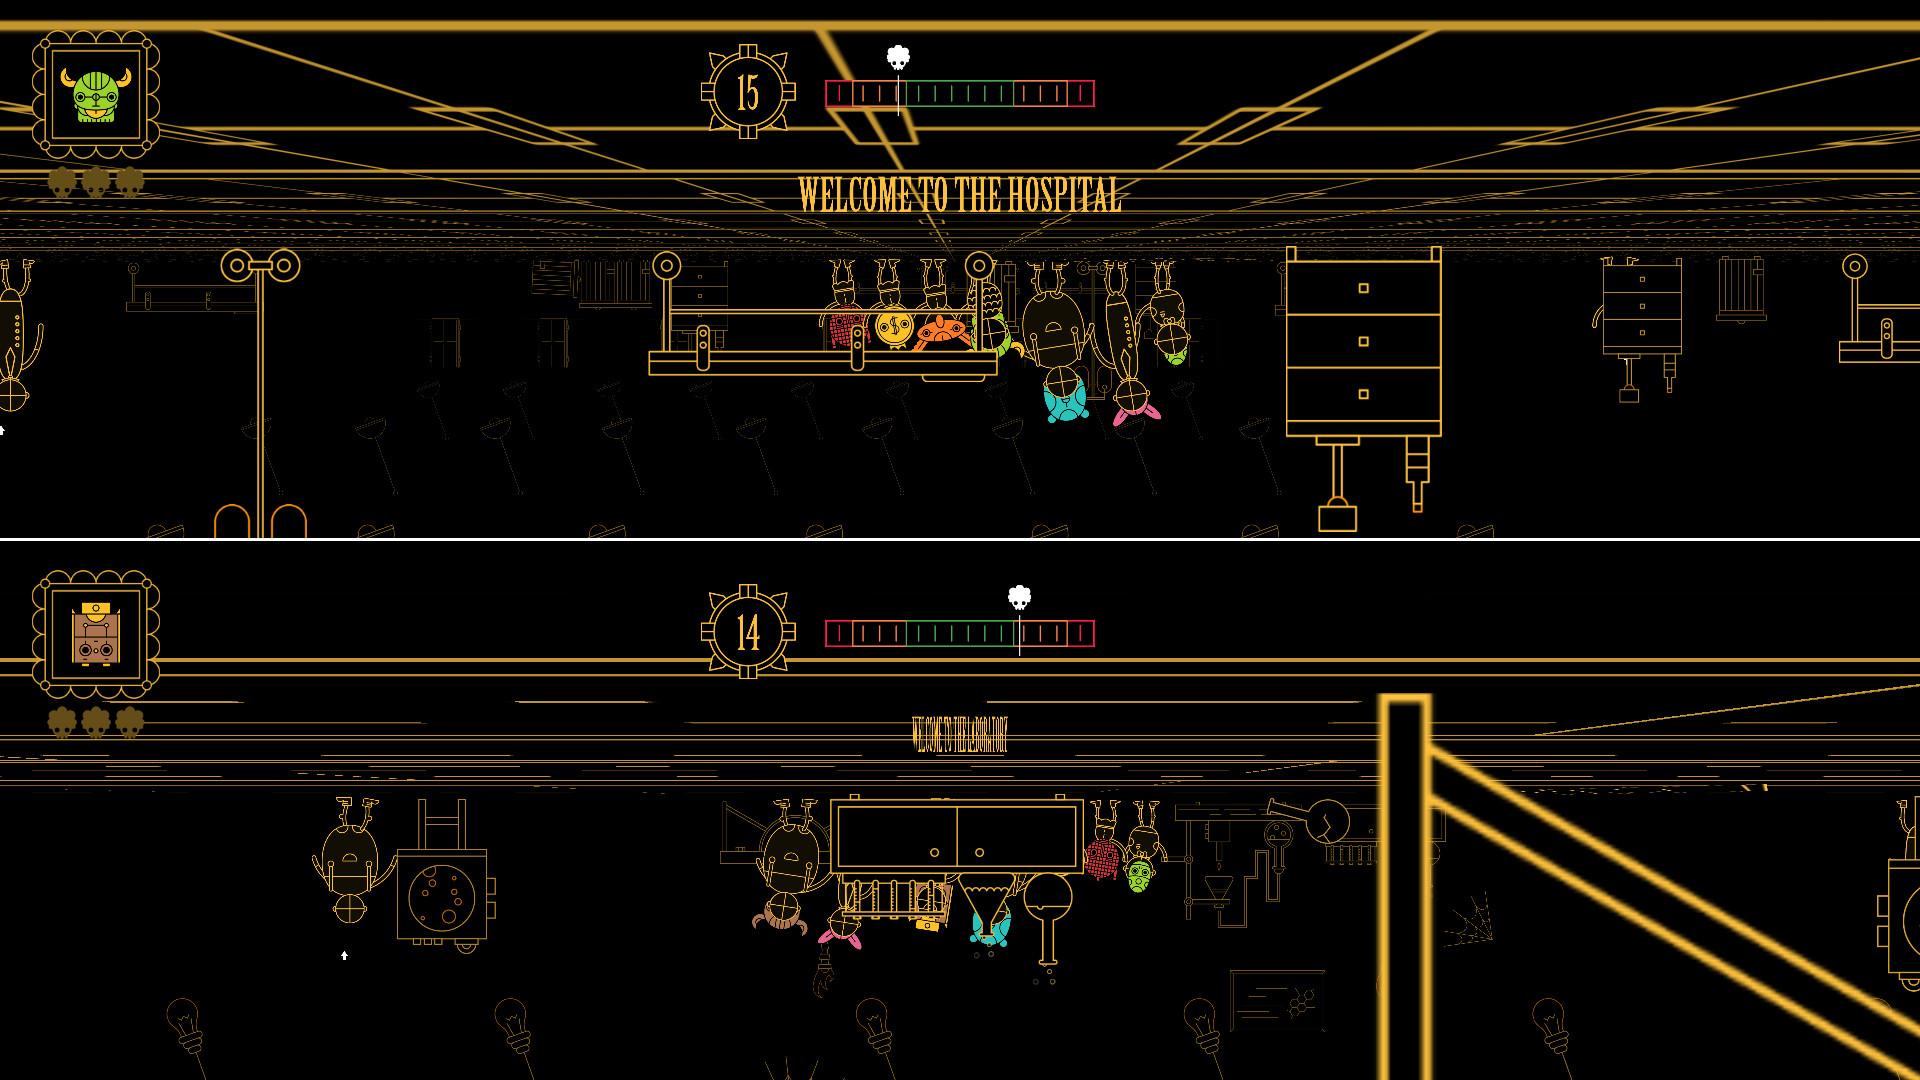 Screenshot №3 from game Masky